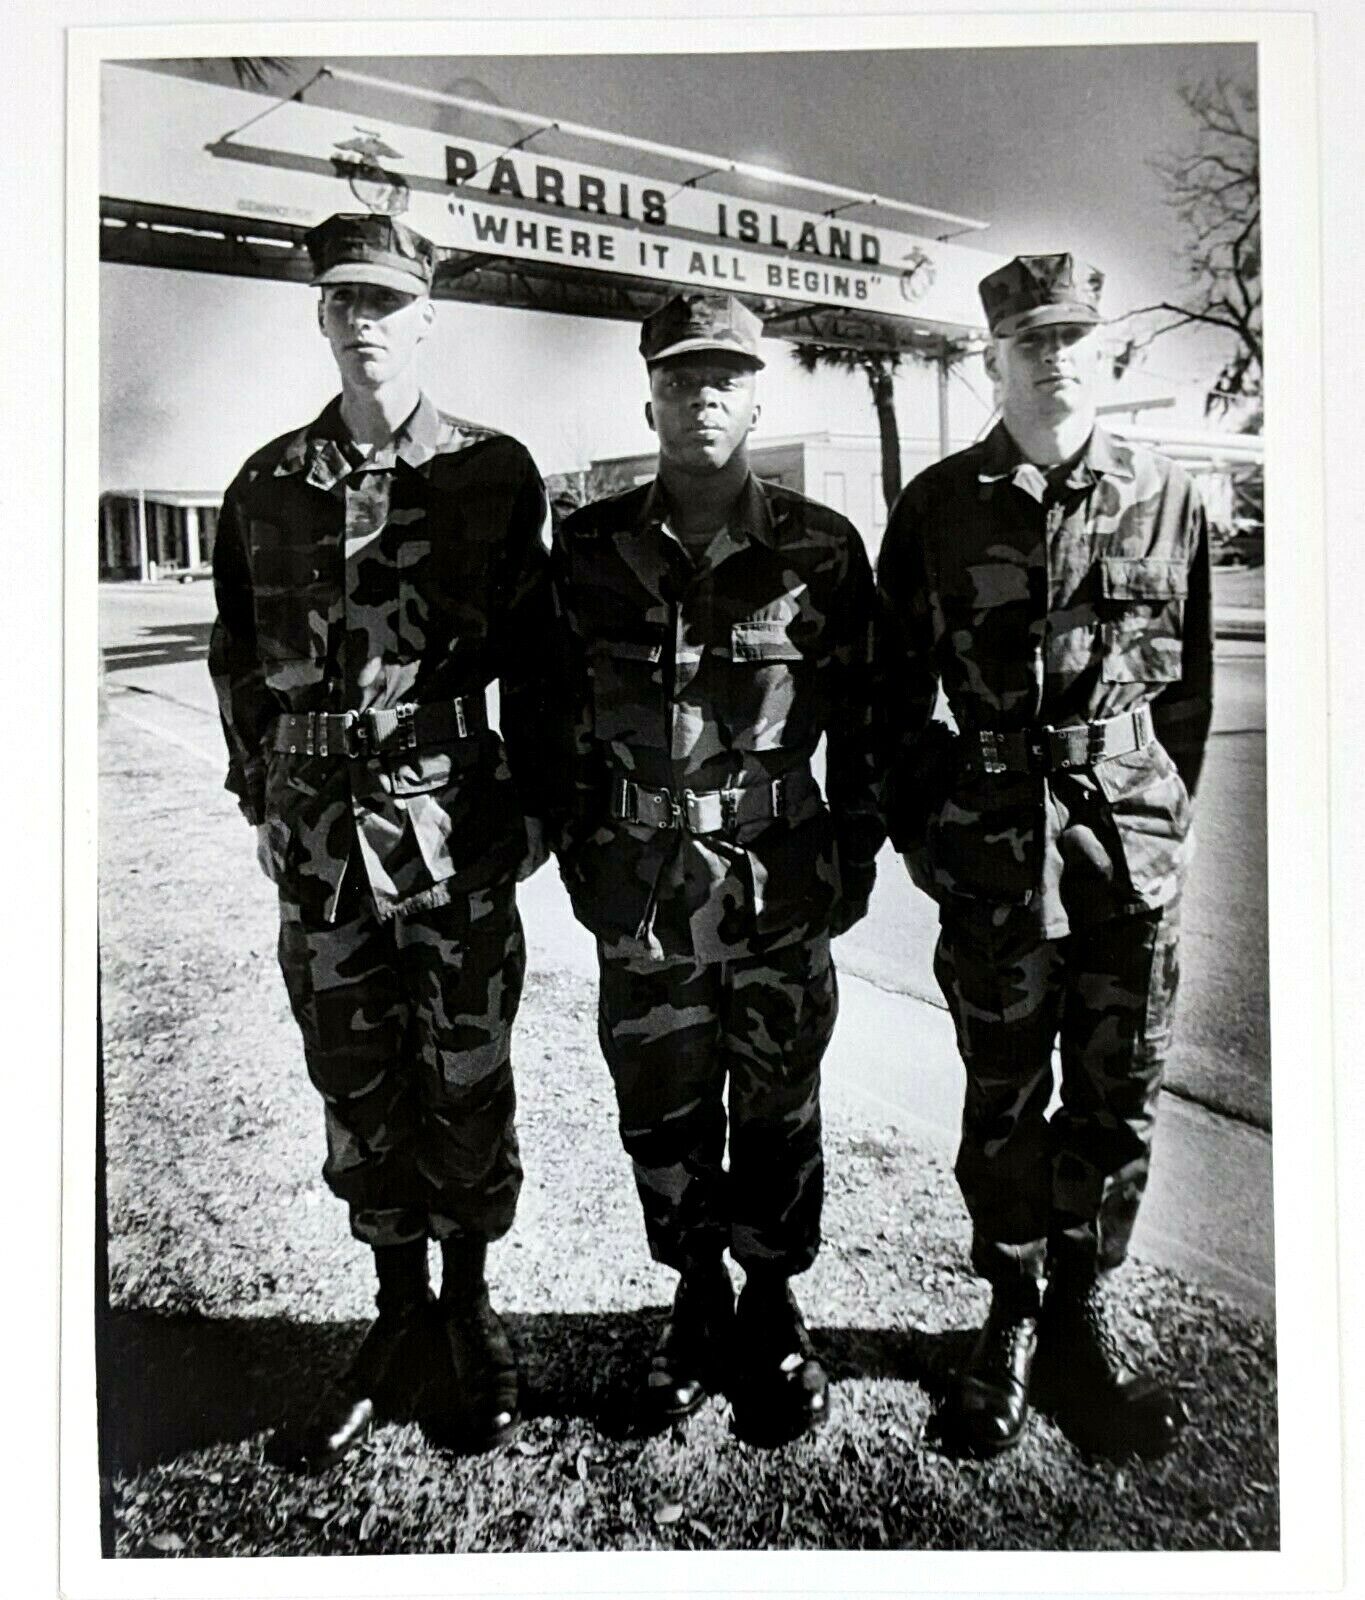 1988 Parris Island SC Marine Recruits at Attention Camo Fatigues VTG Press Photo